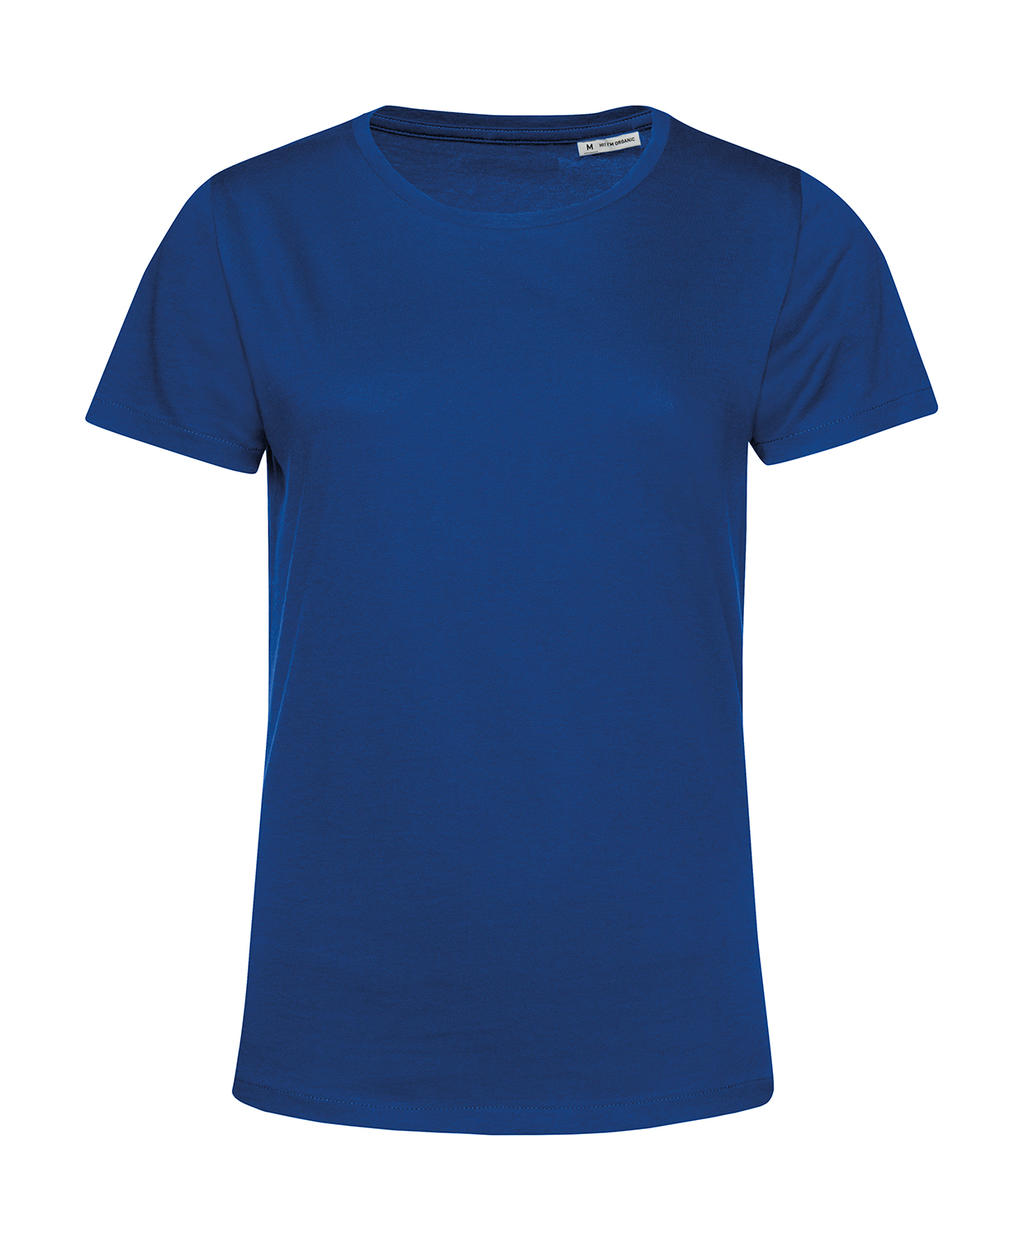 Tričko dámské BC Organic Inspire E150 - modré, XS